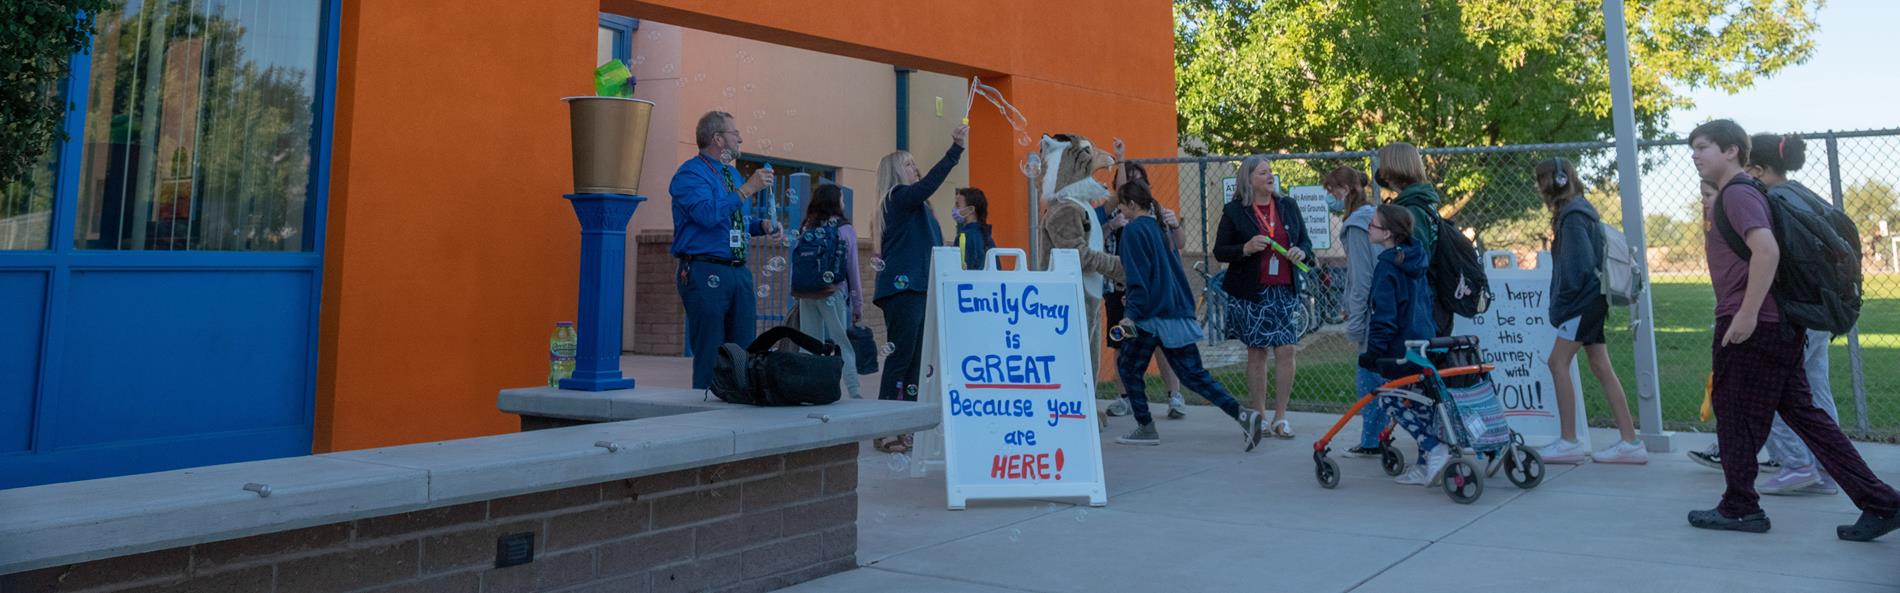 greeting students at school entrance